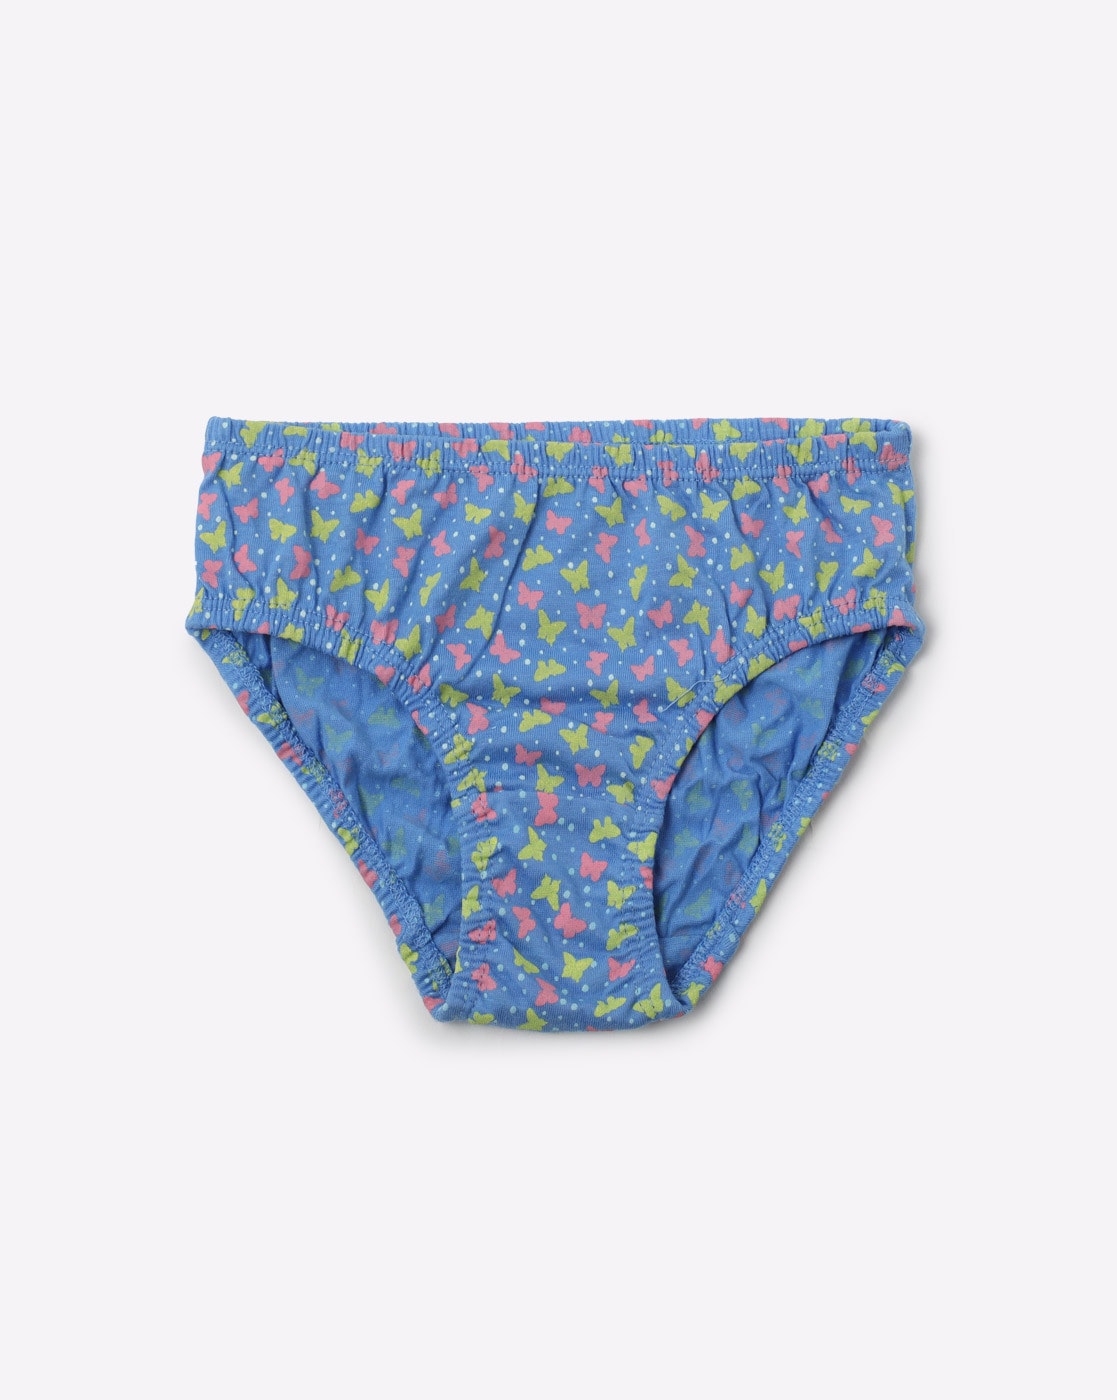 Bamboo Girls Bikin Underwear 3 pack (Deep Ocean/Fall Leaf/West Coast) 